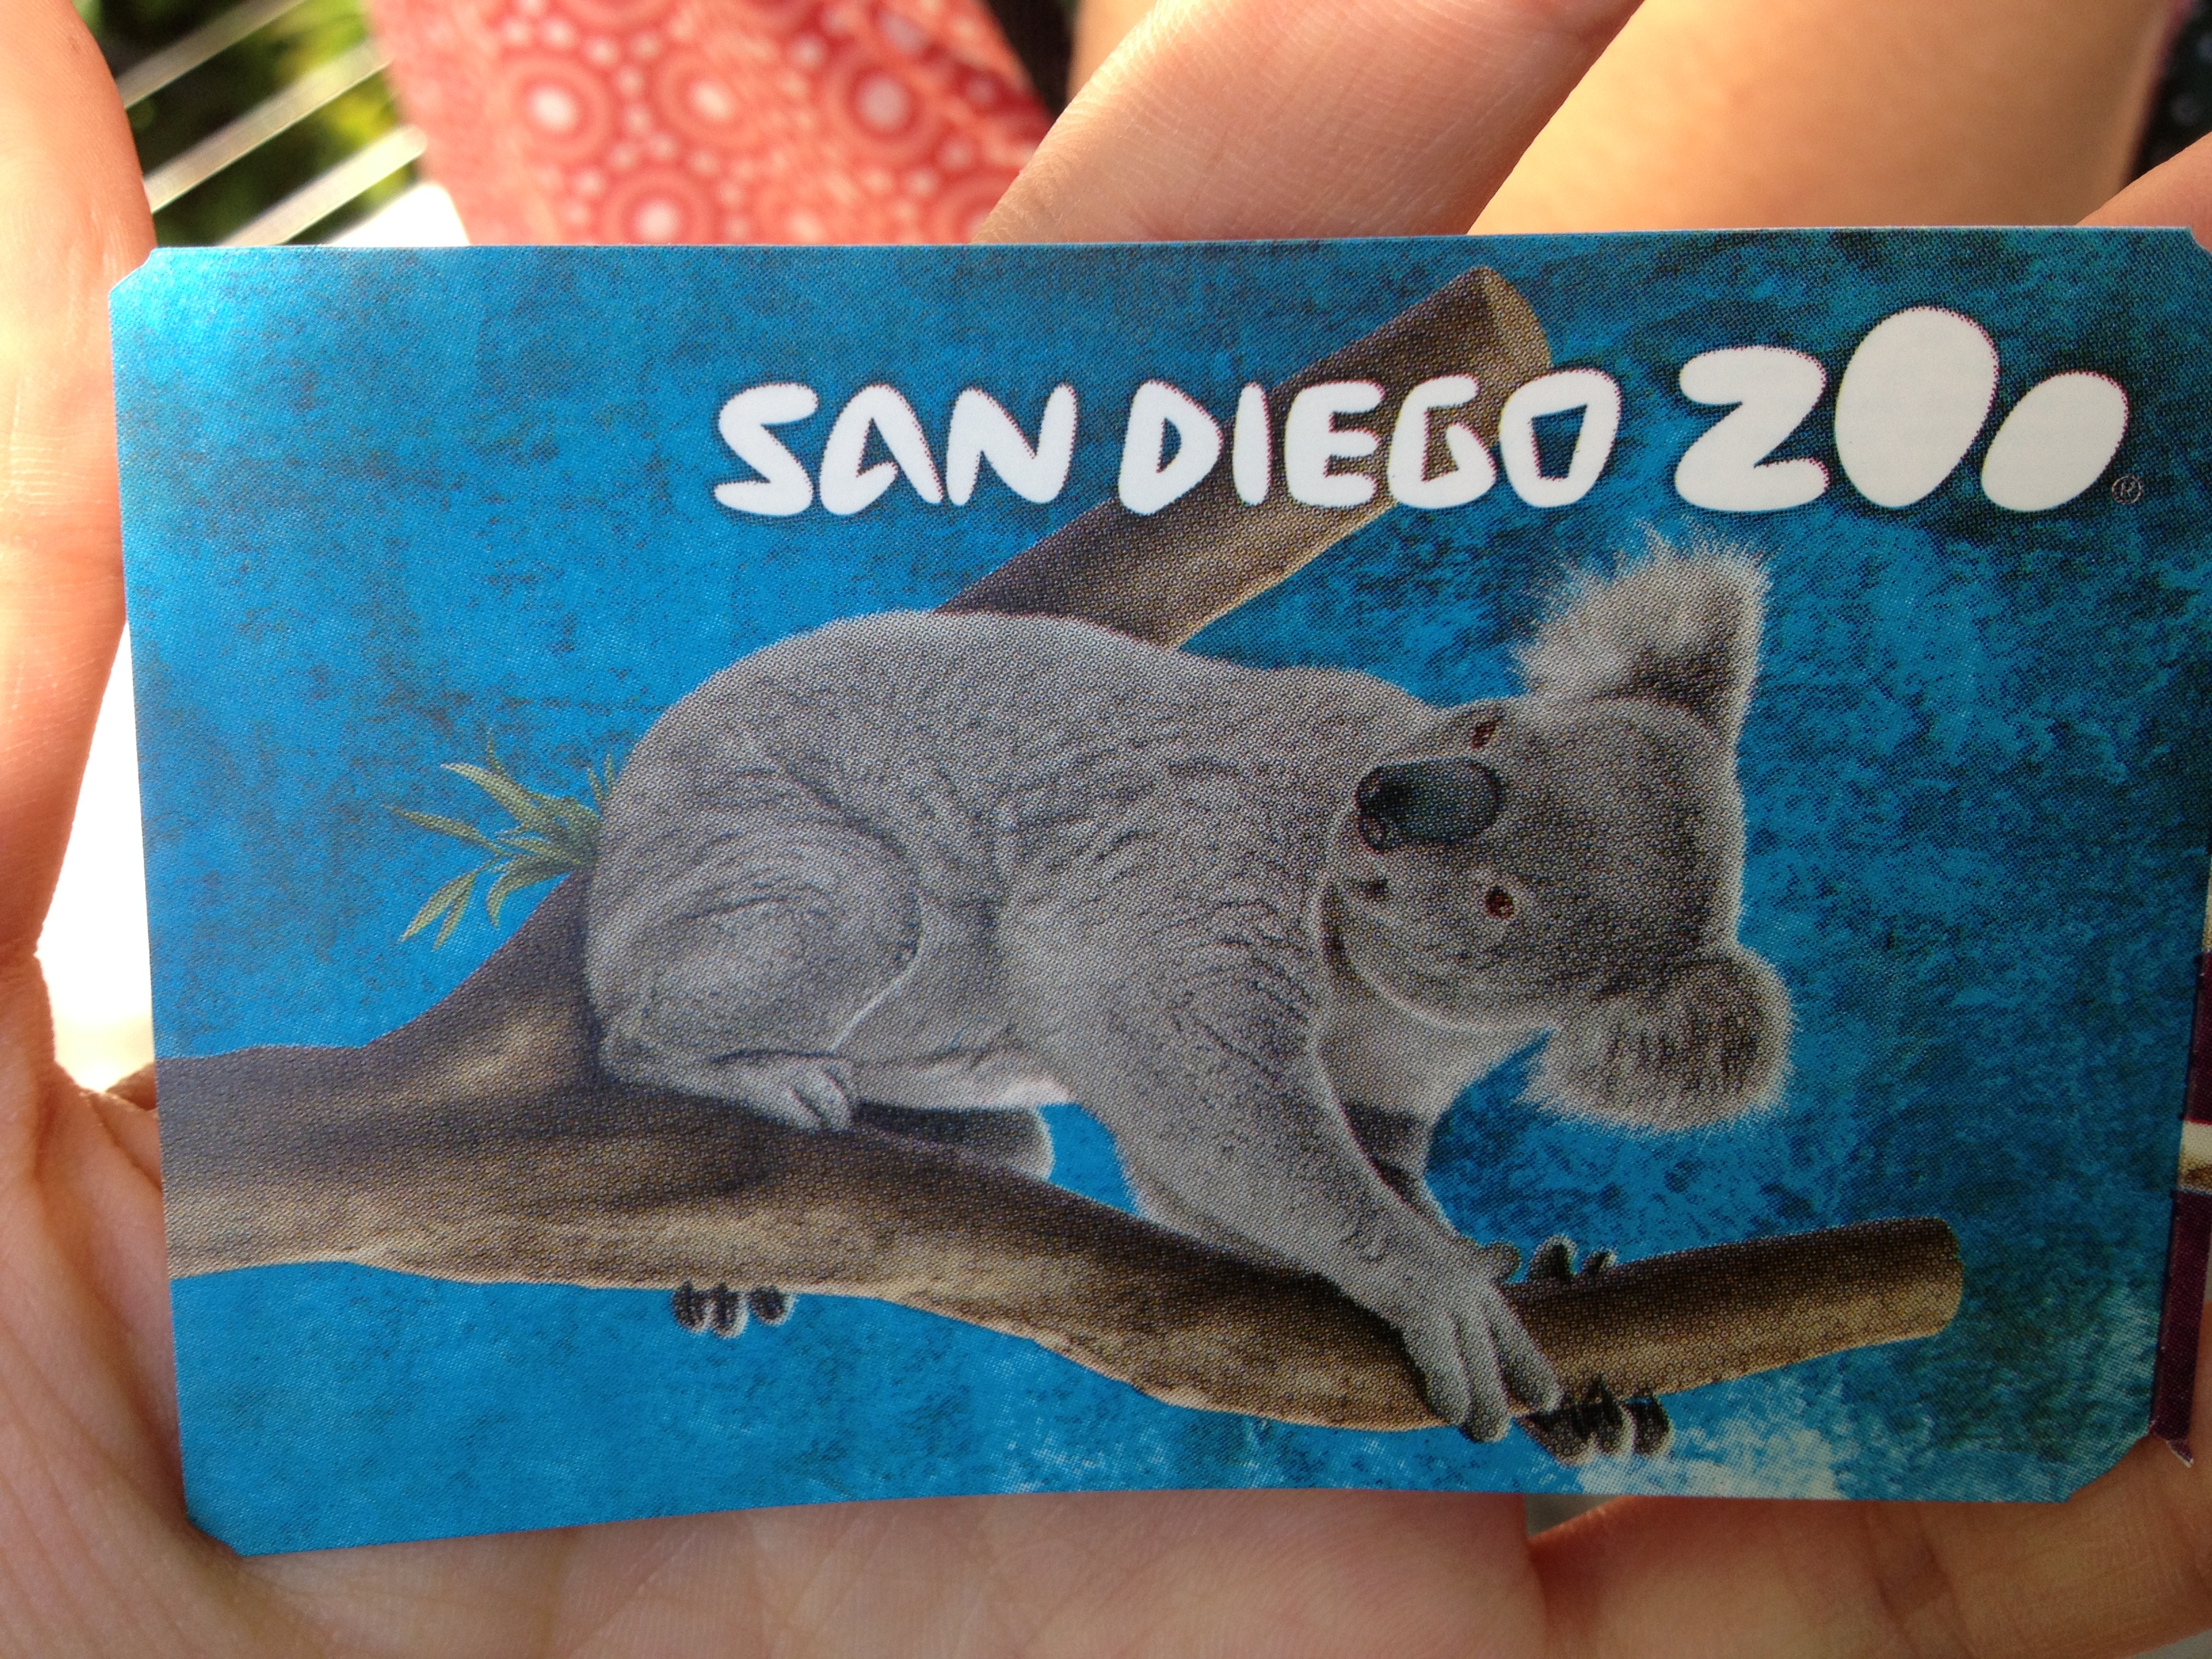 Sandiego zoo ticket